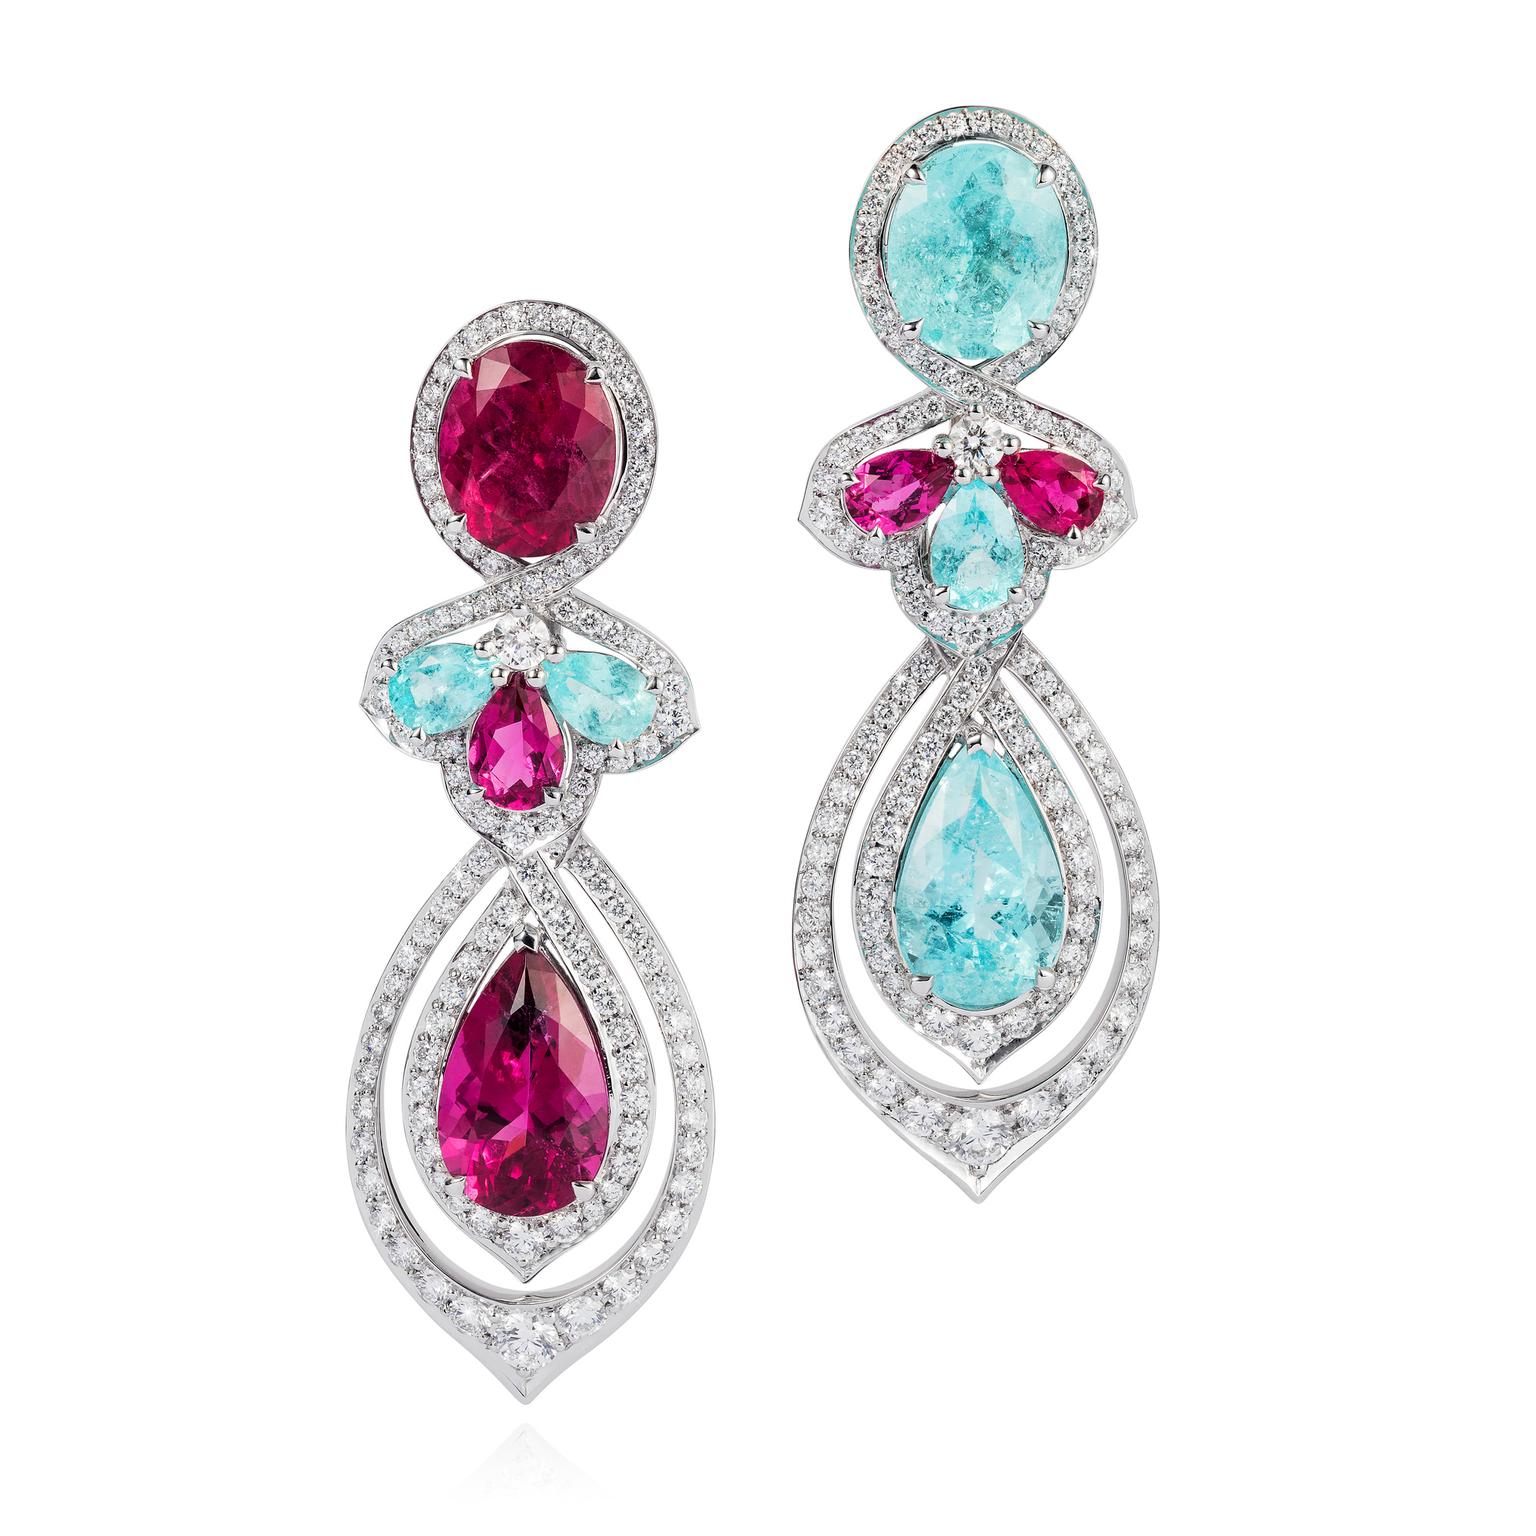 VanLeles Brazilian Paraiba tourmaline, rubellite and diamond earrings